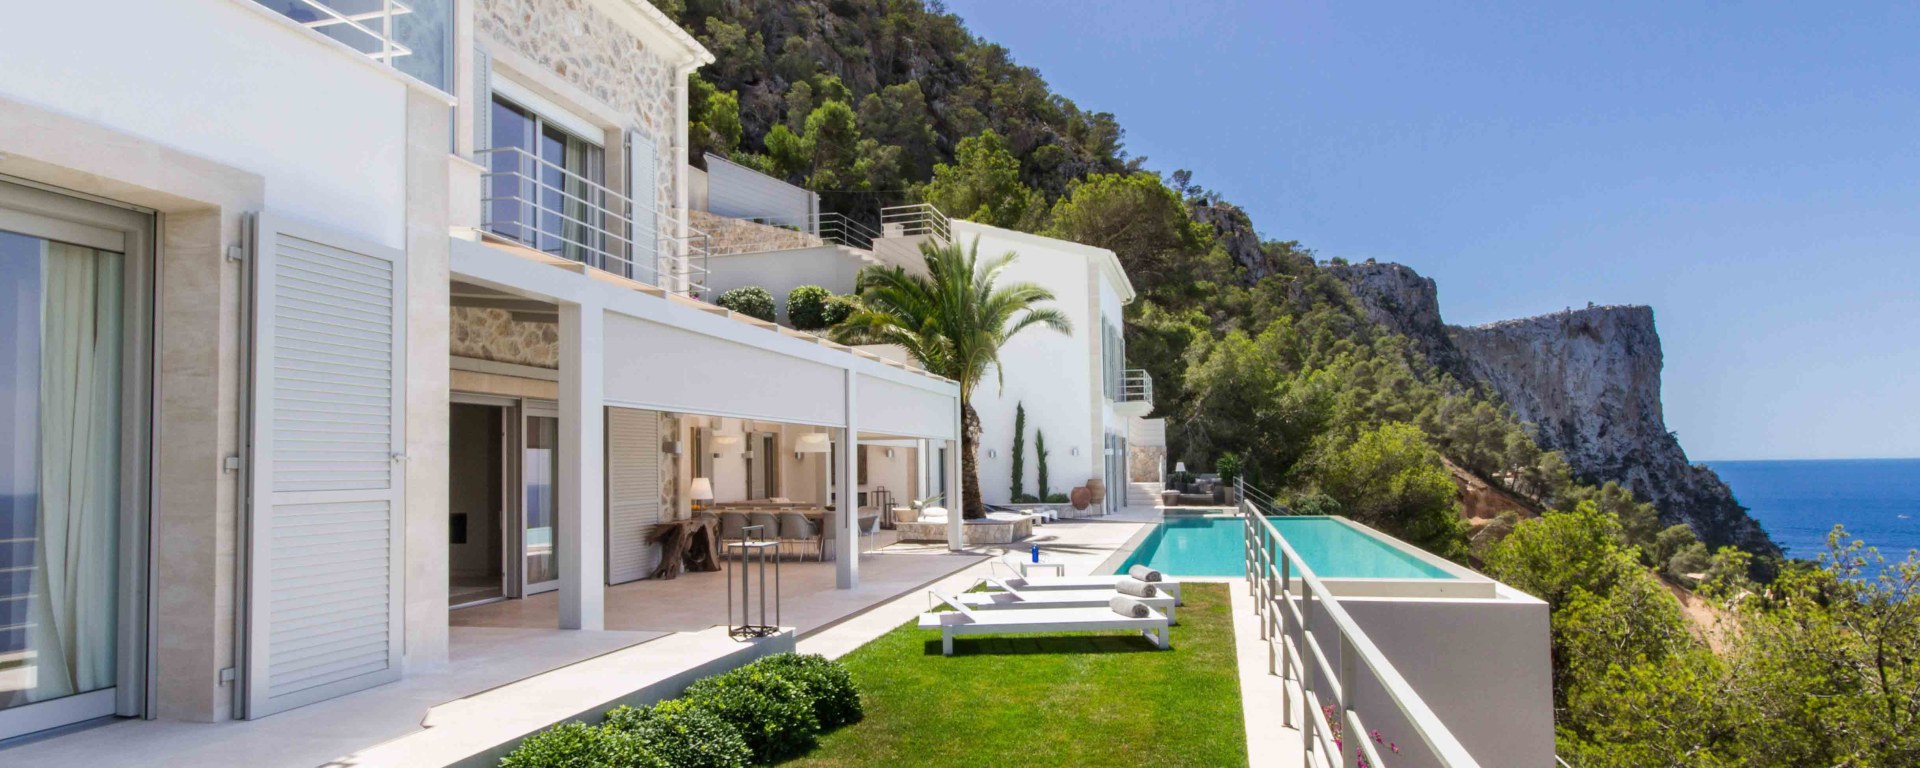 Modernes Ferienhaus Mallorca Mieten Villa Marivent